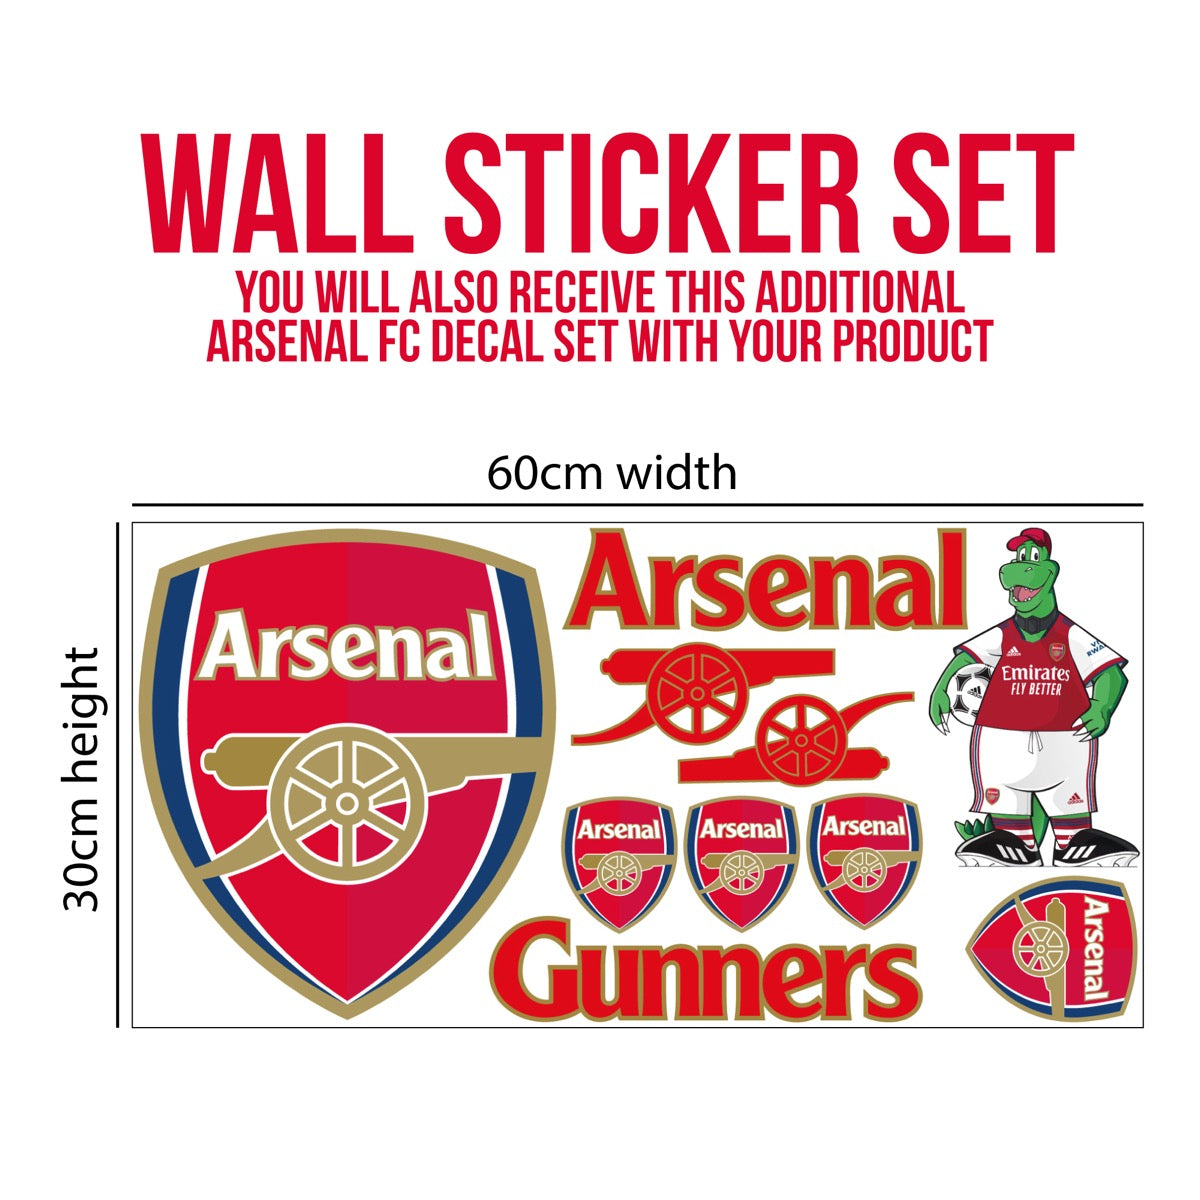 Arsenal Football Club - Emirates Stadium Aerial View Mural + Gunners Wall Sticker Set